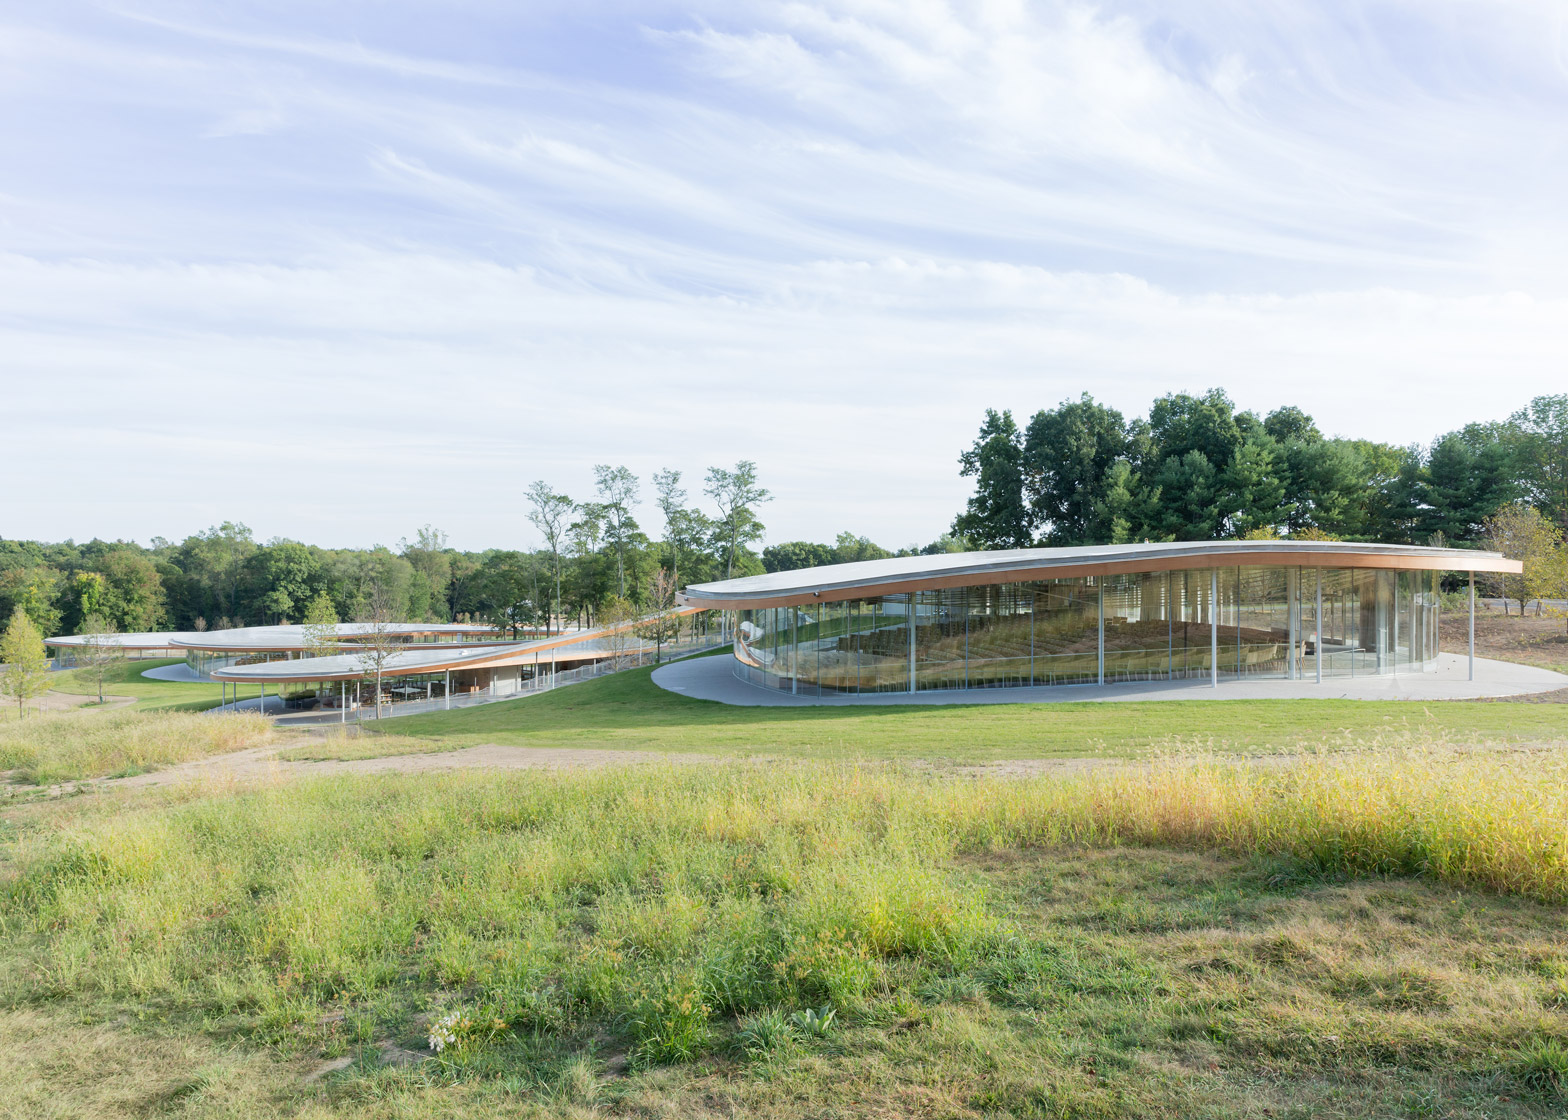 Sanaa-designed cultural center opens at Connecticut’s Grace Farms